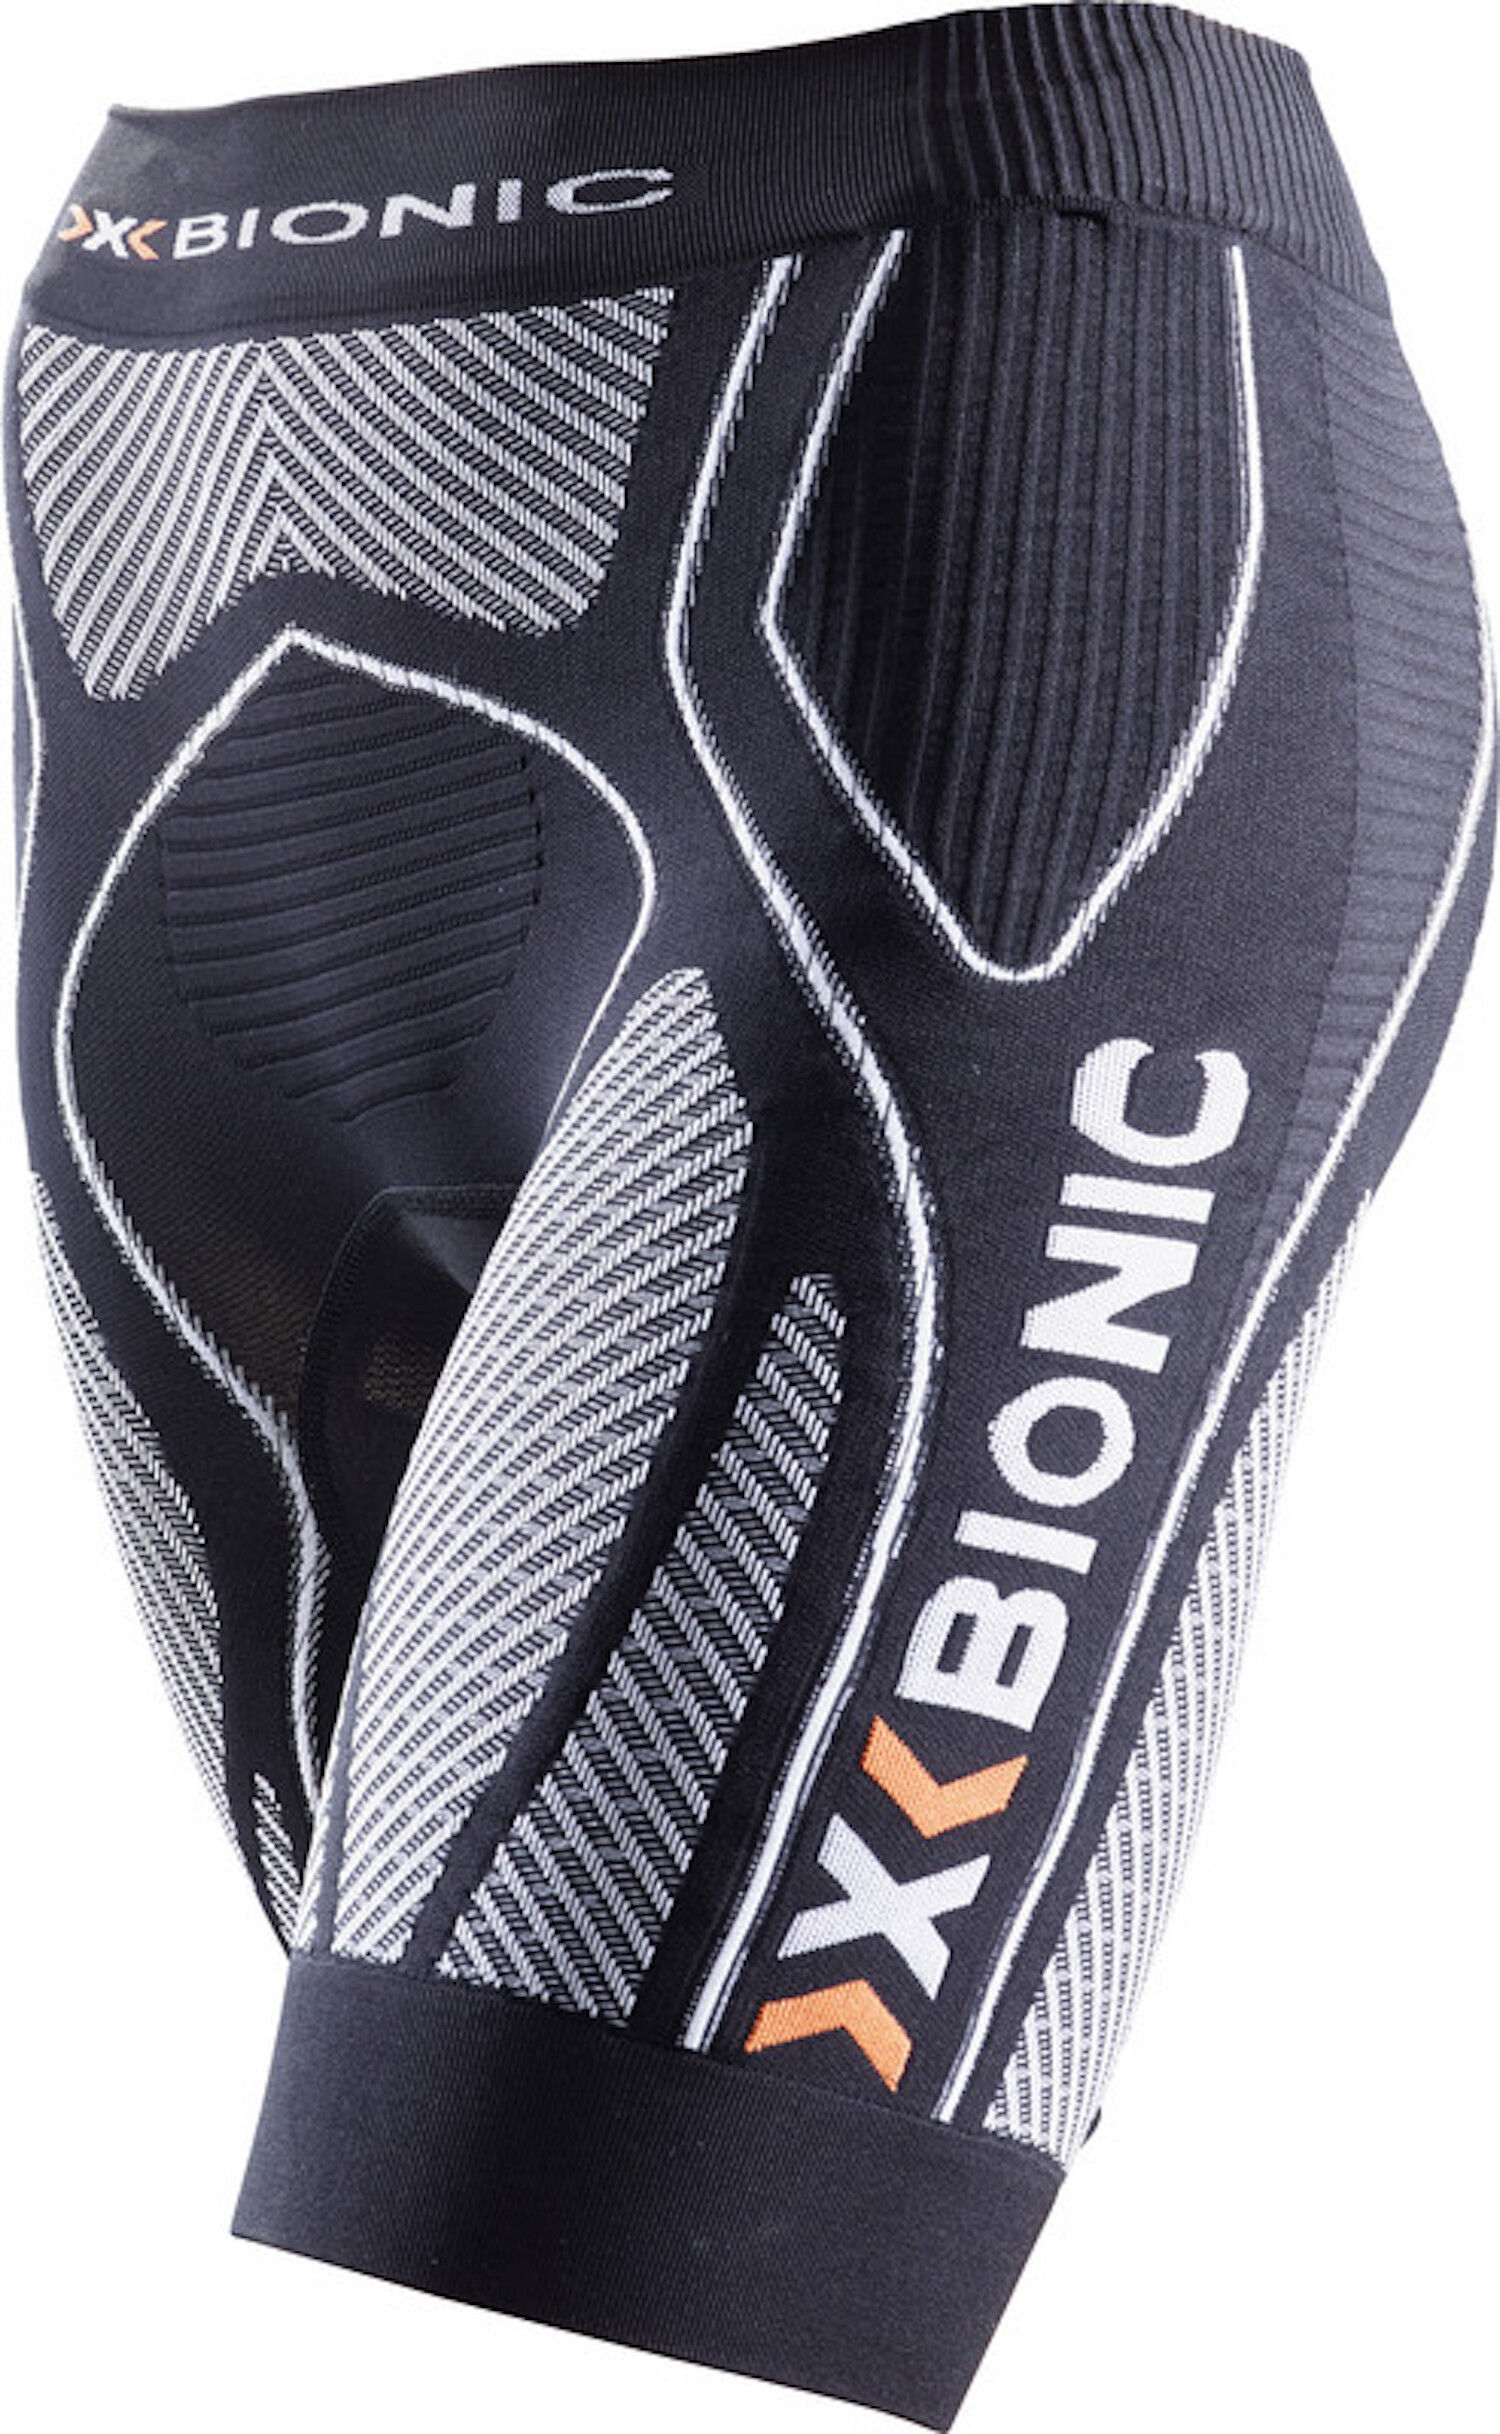 X-Bionic - The Trick - Running shorts - Women's